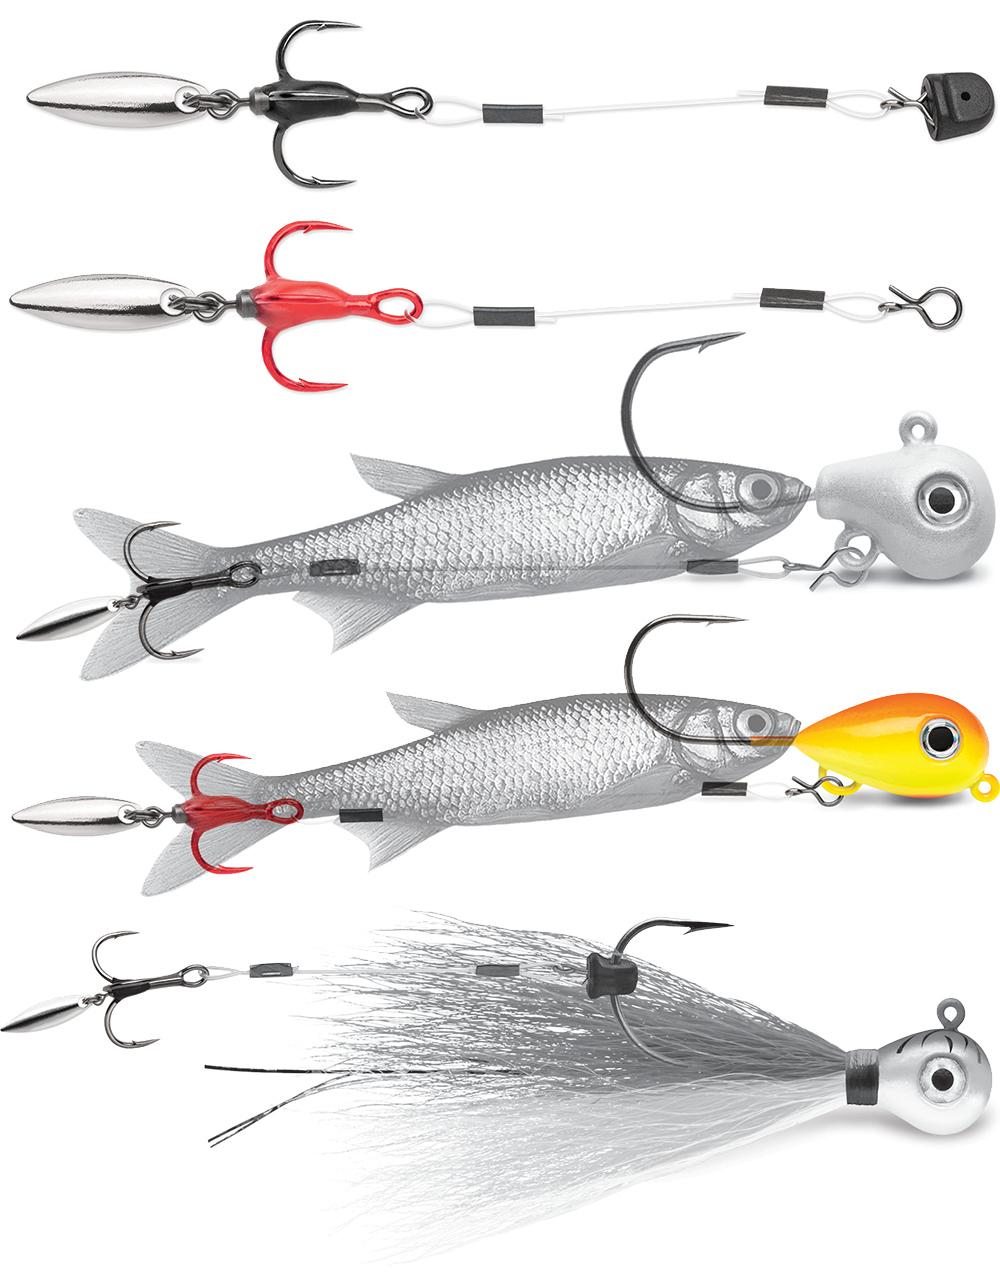 ICAST new walleye and ice fishing stuff 💯 part 2 – Target Walleye